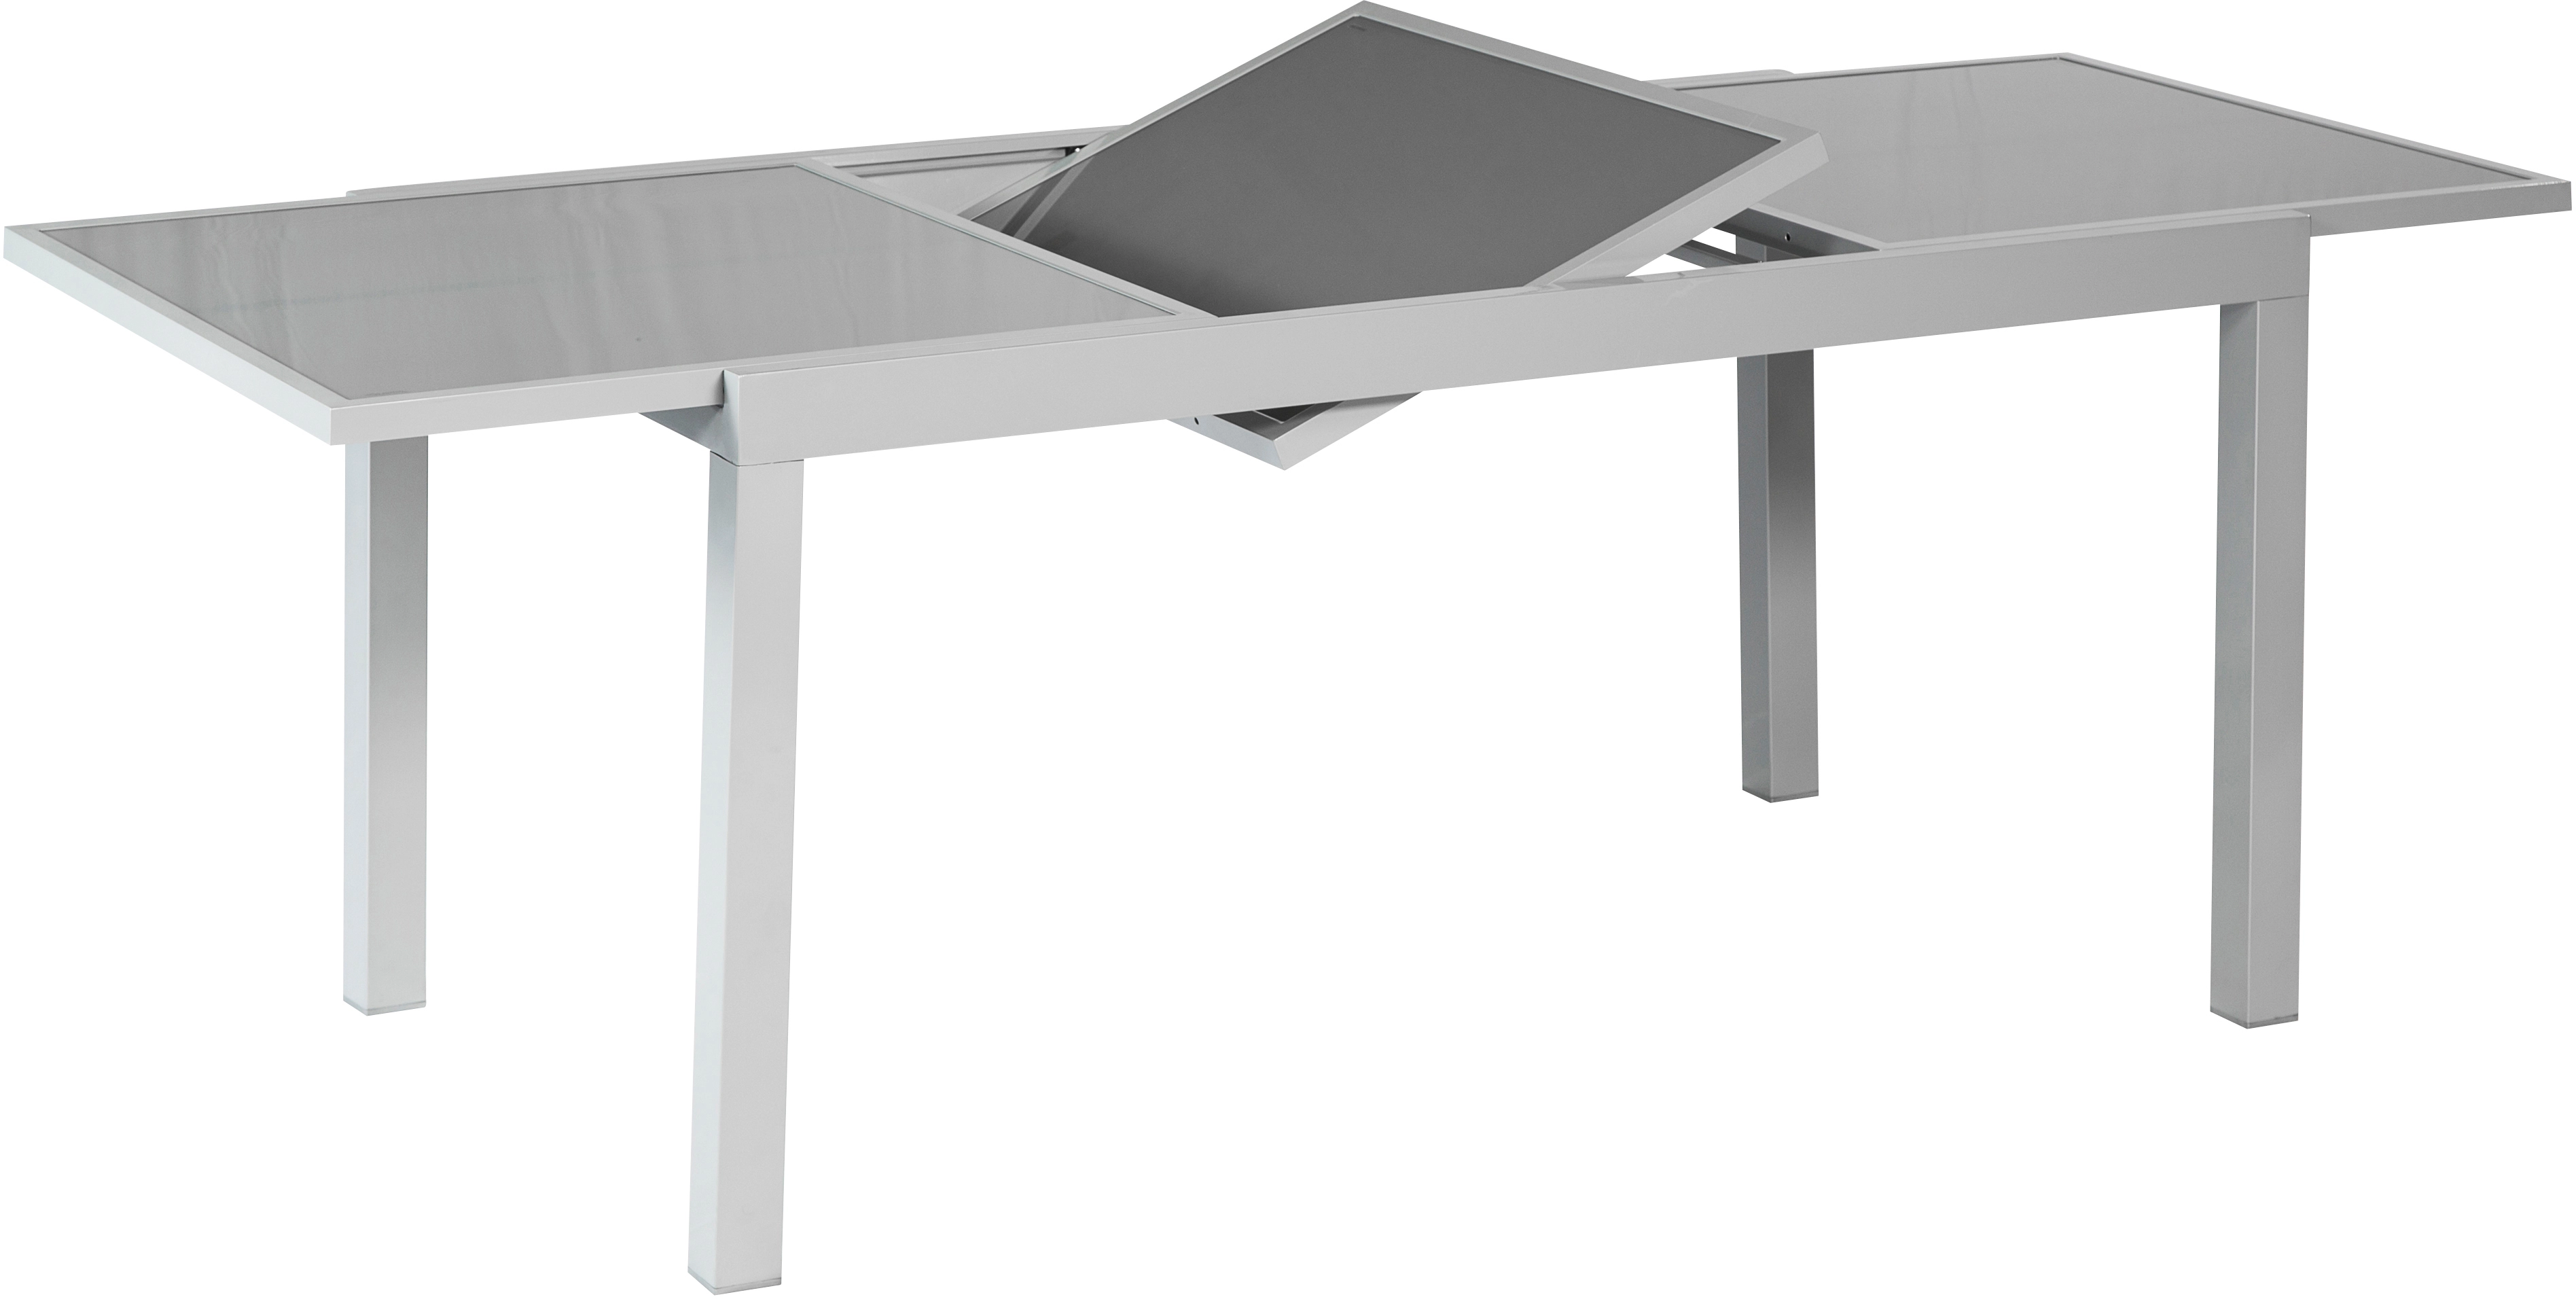 Merxx Gartentisch cm Rechteckig Aluminium Ausziehbar x 90 120/180 cm Grau